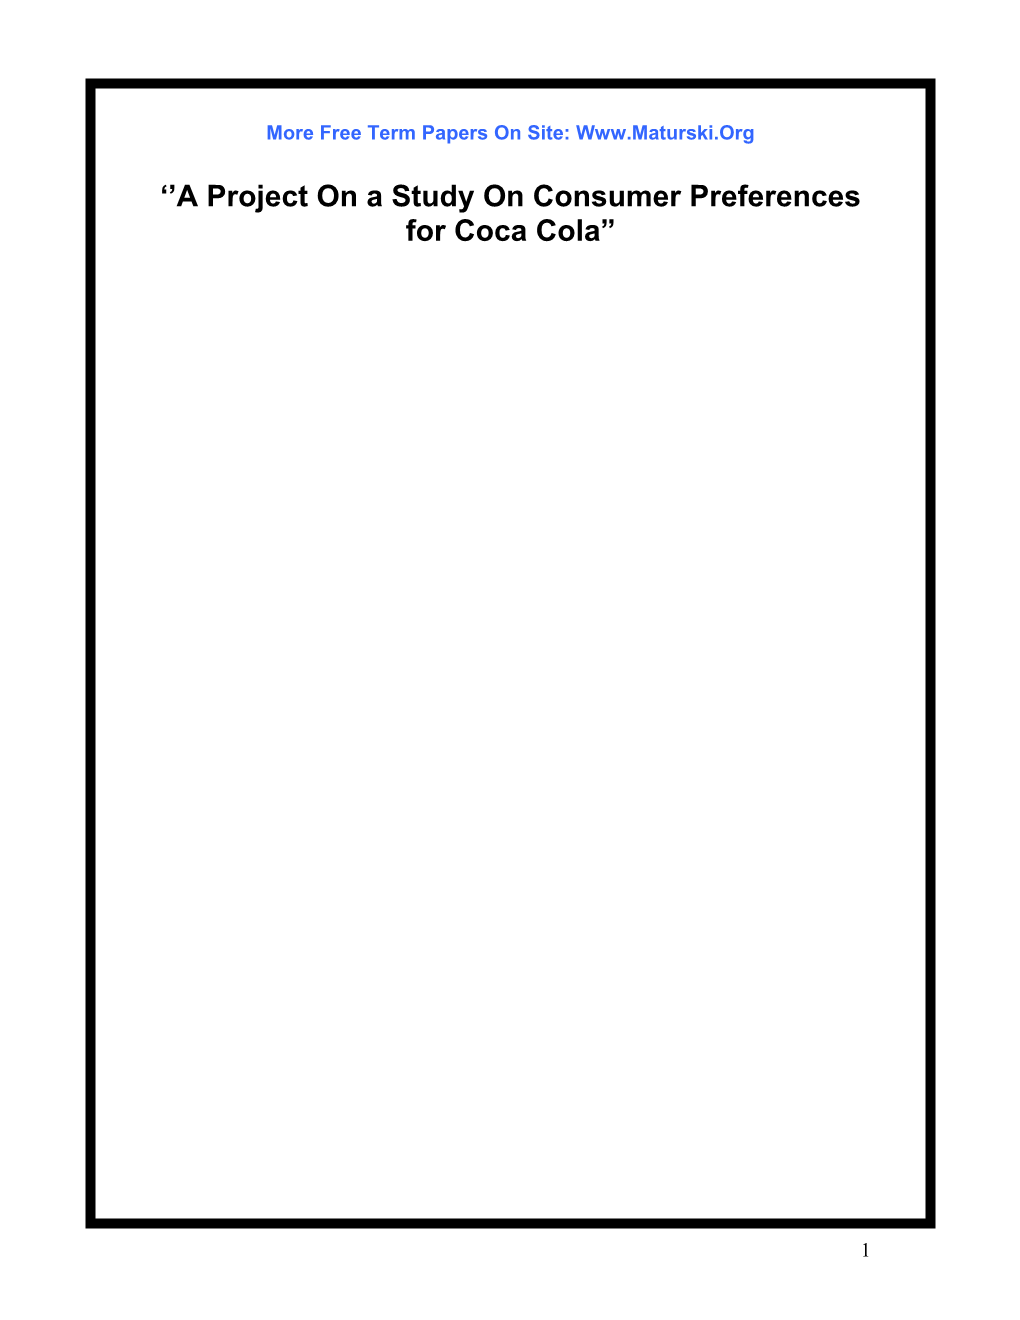 A Study on Consumer Preferences for Coca Cola